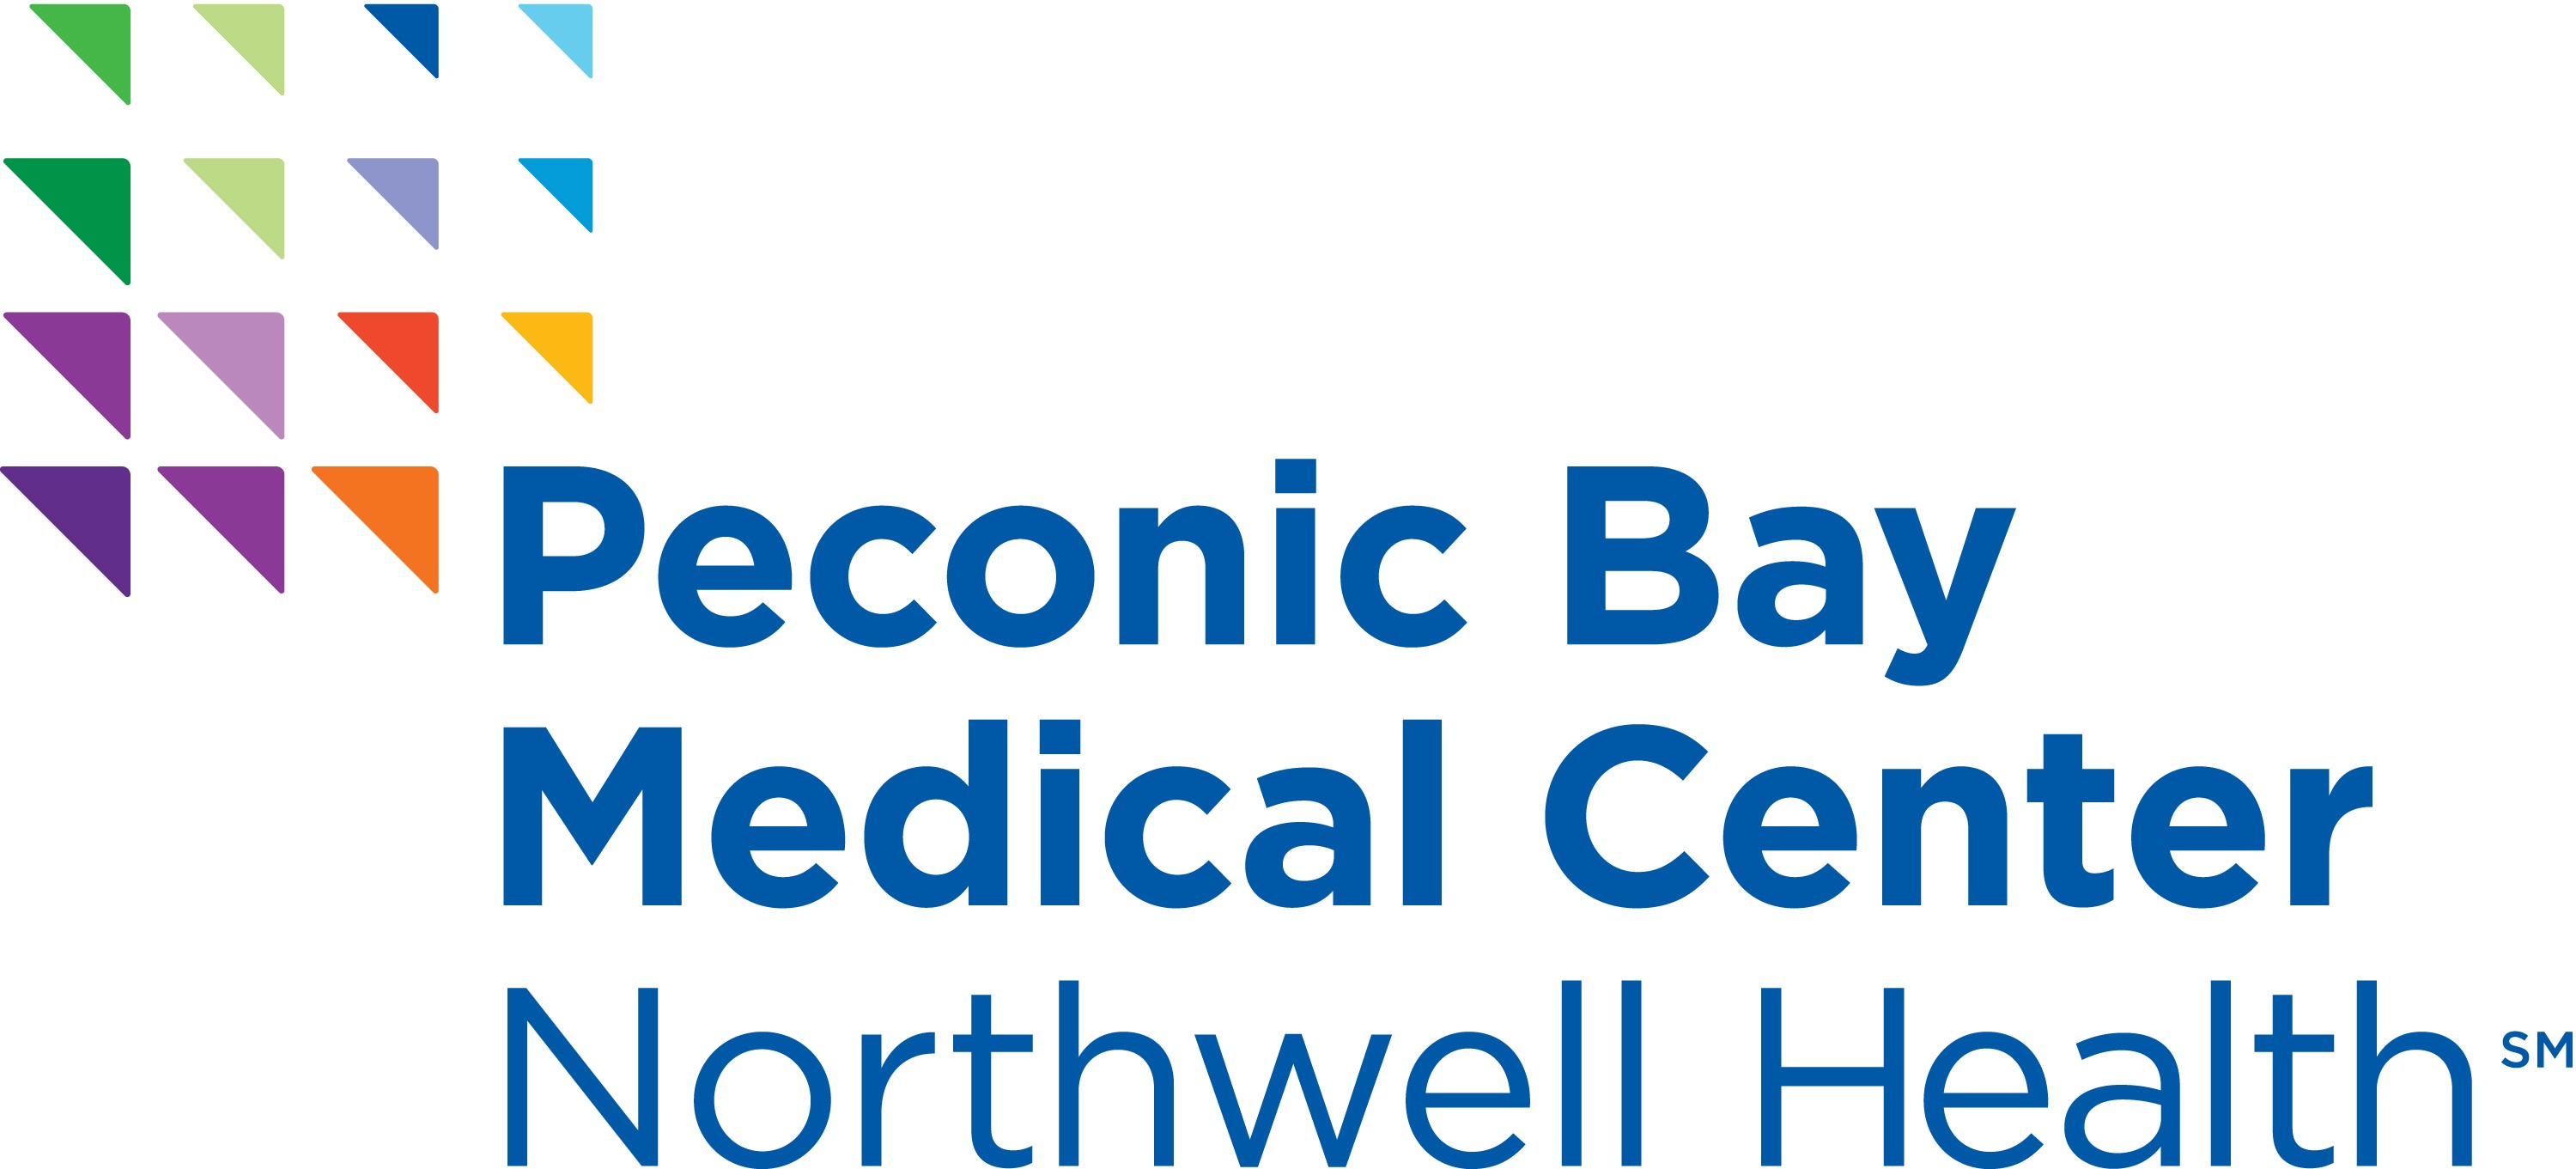 Peconic Bay Medical Center logo stacked